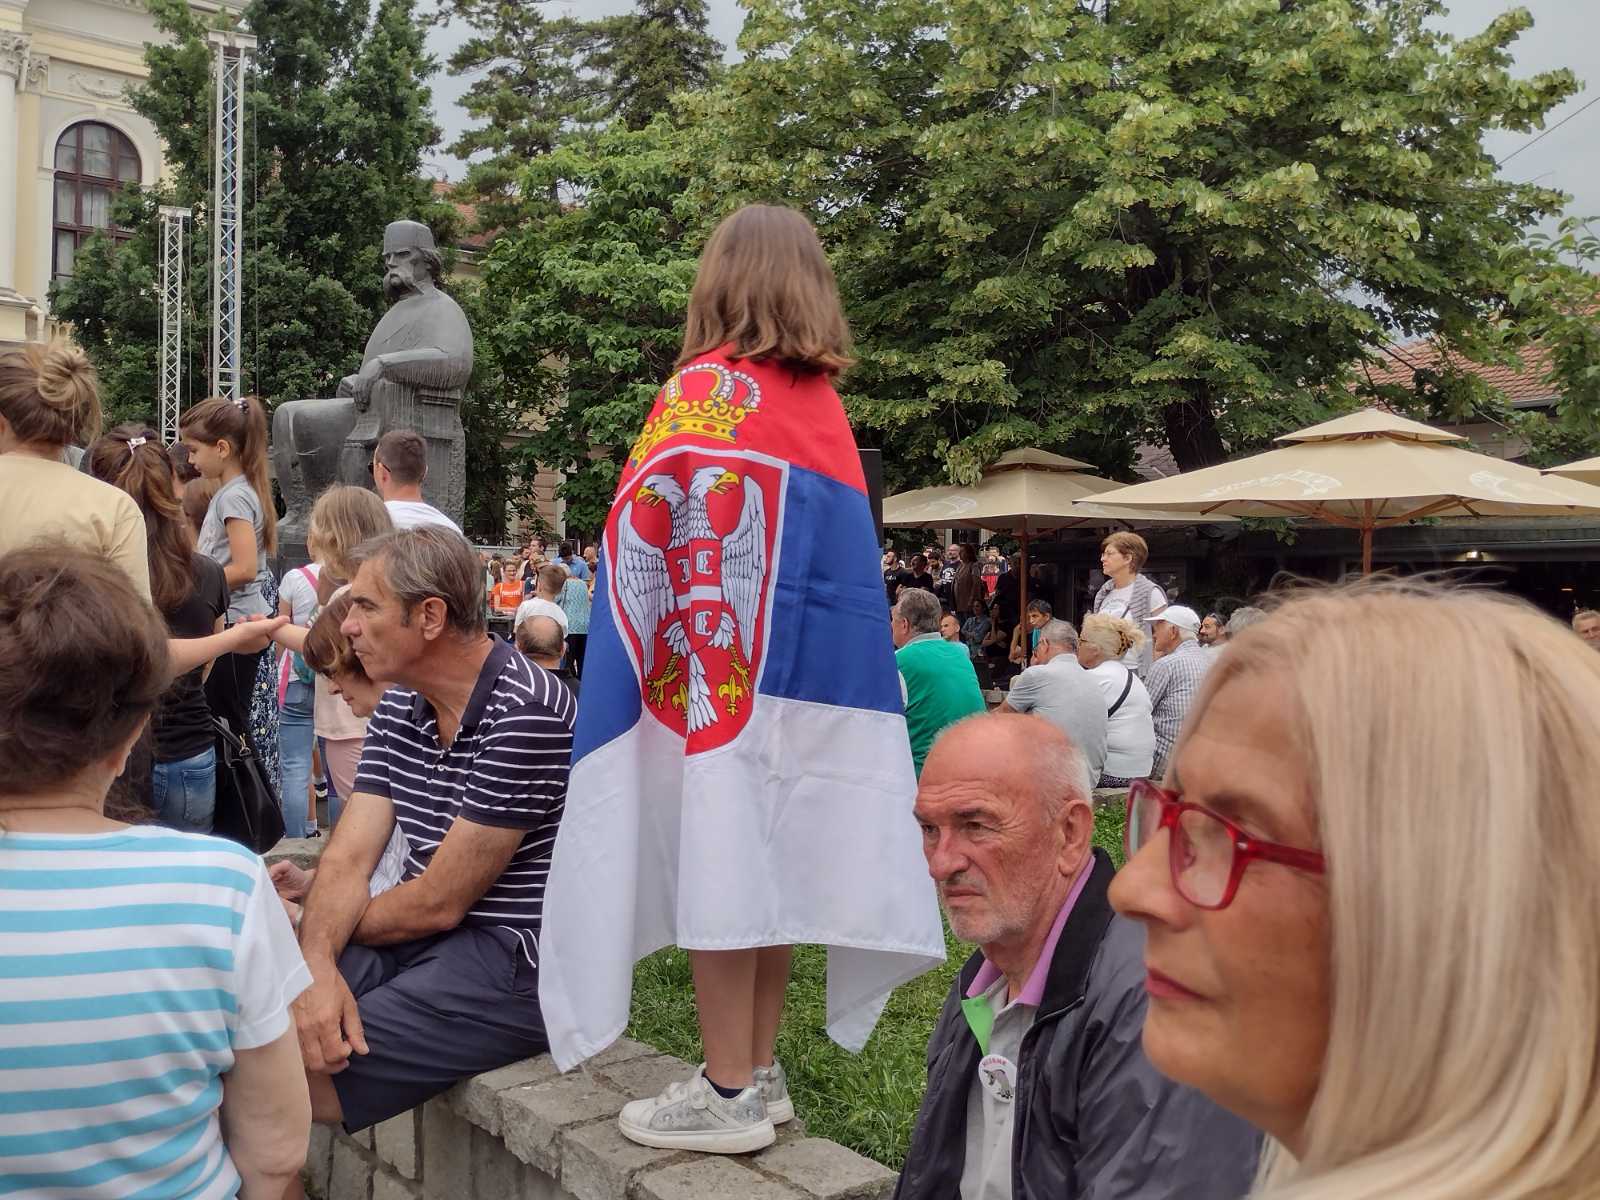 "Zar je bitno da li sam s Metohije ili s Dorćola?": Osmi protest "Srbija protiv nasilja" u slikama (FOTO) 19